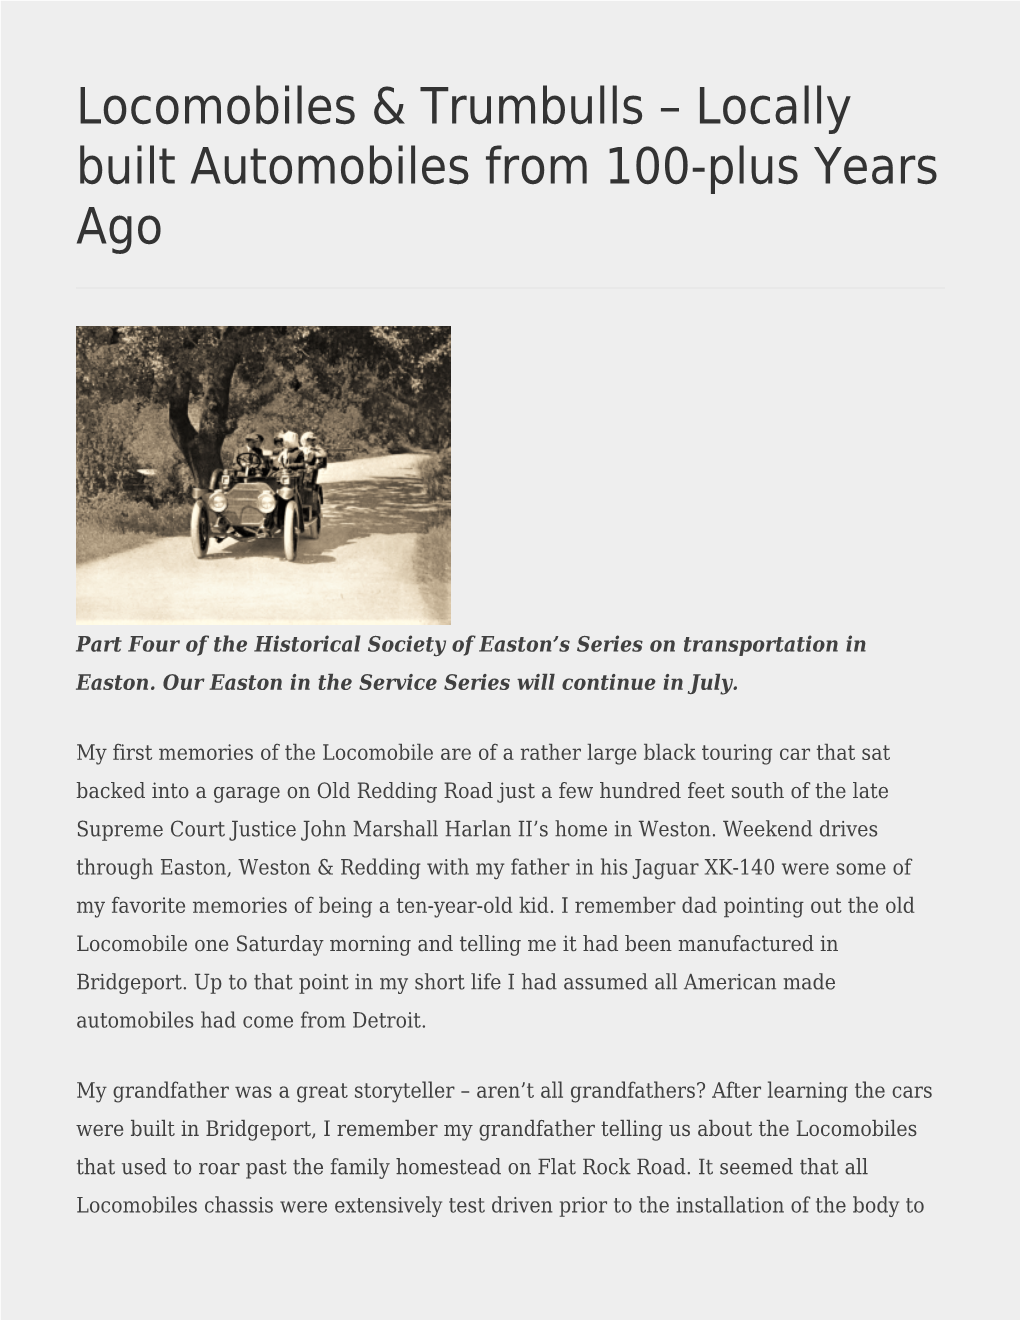 Locomobiles & Trumbulls – Locally Built Automobiles from 100-Plus